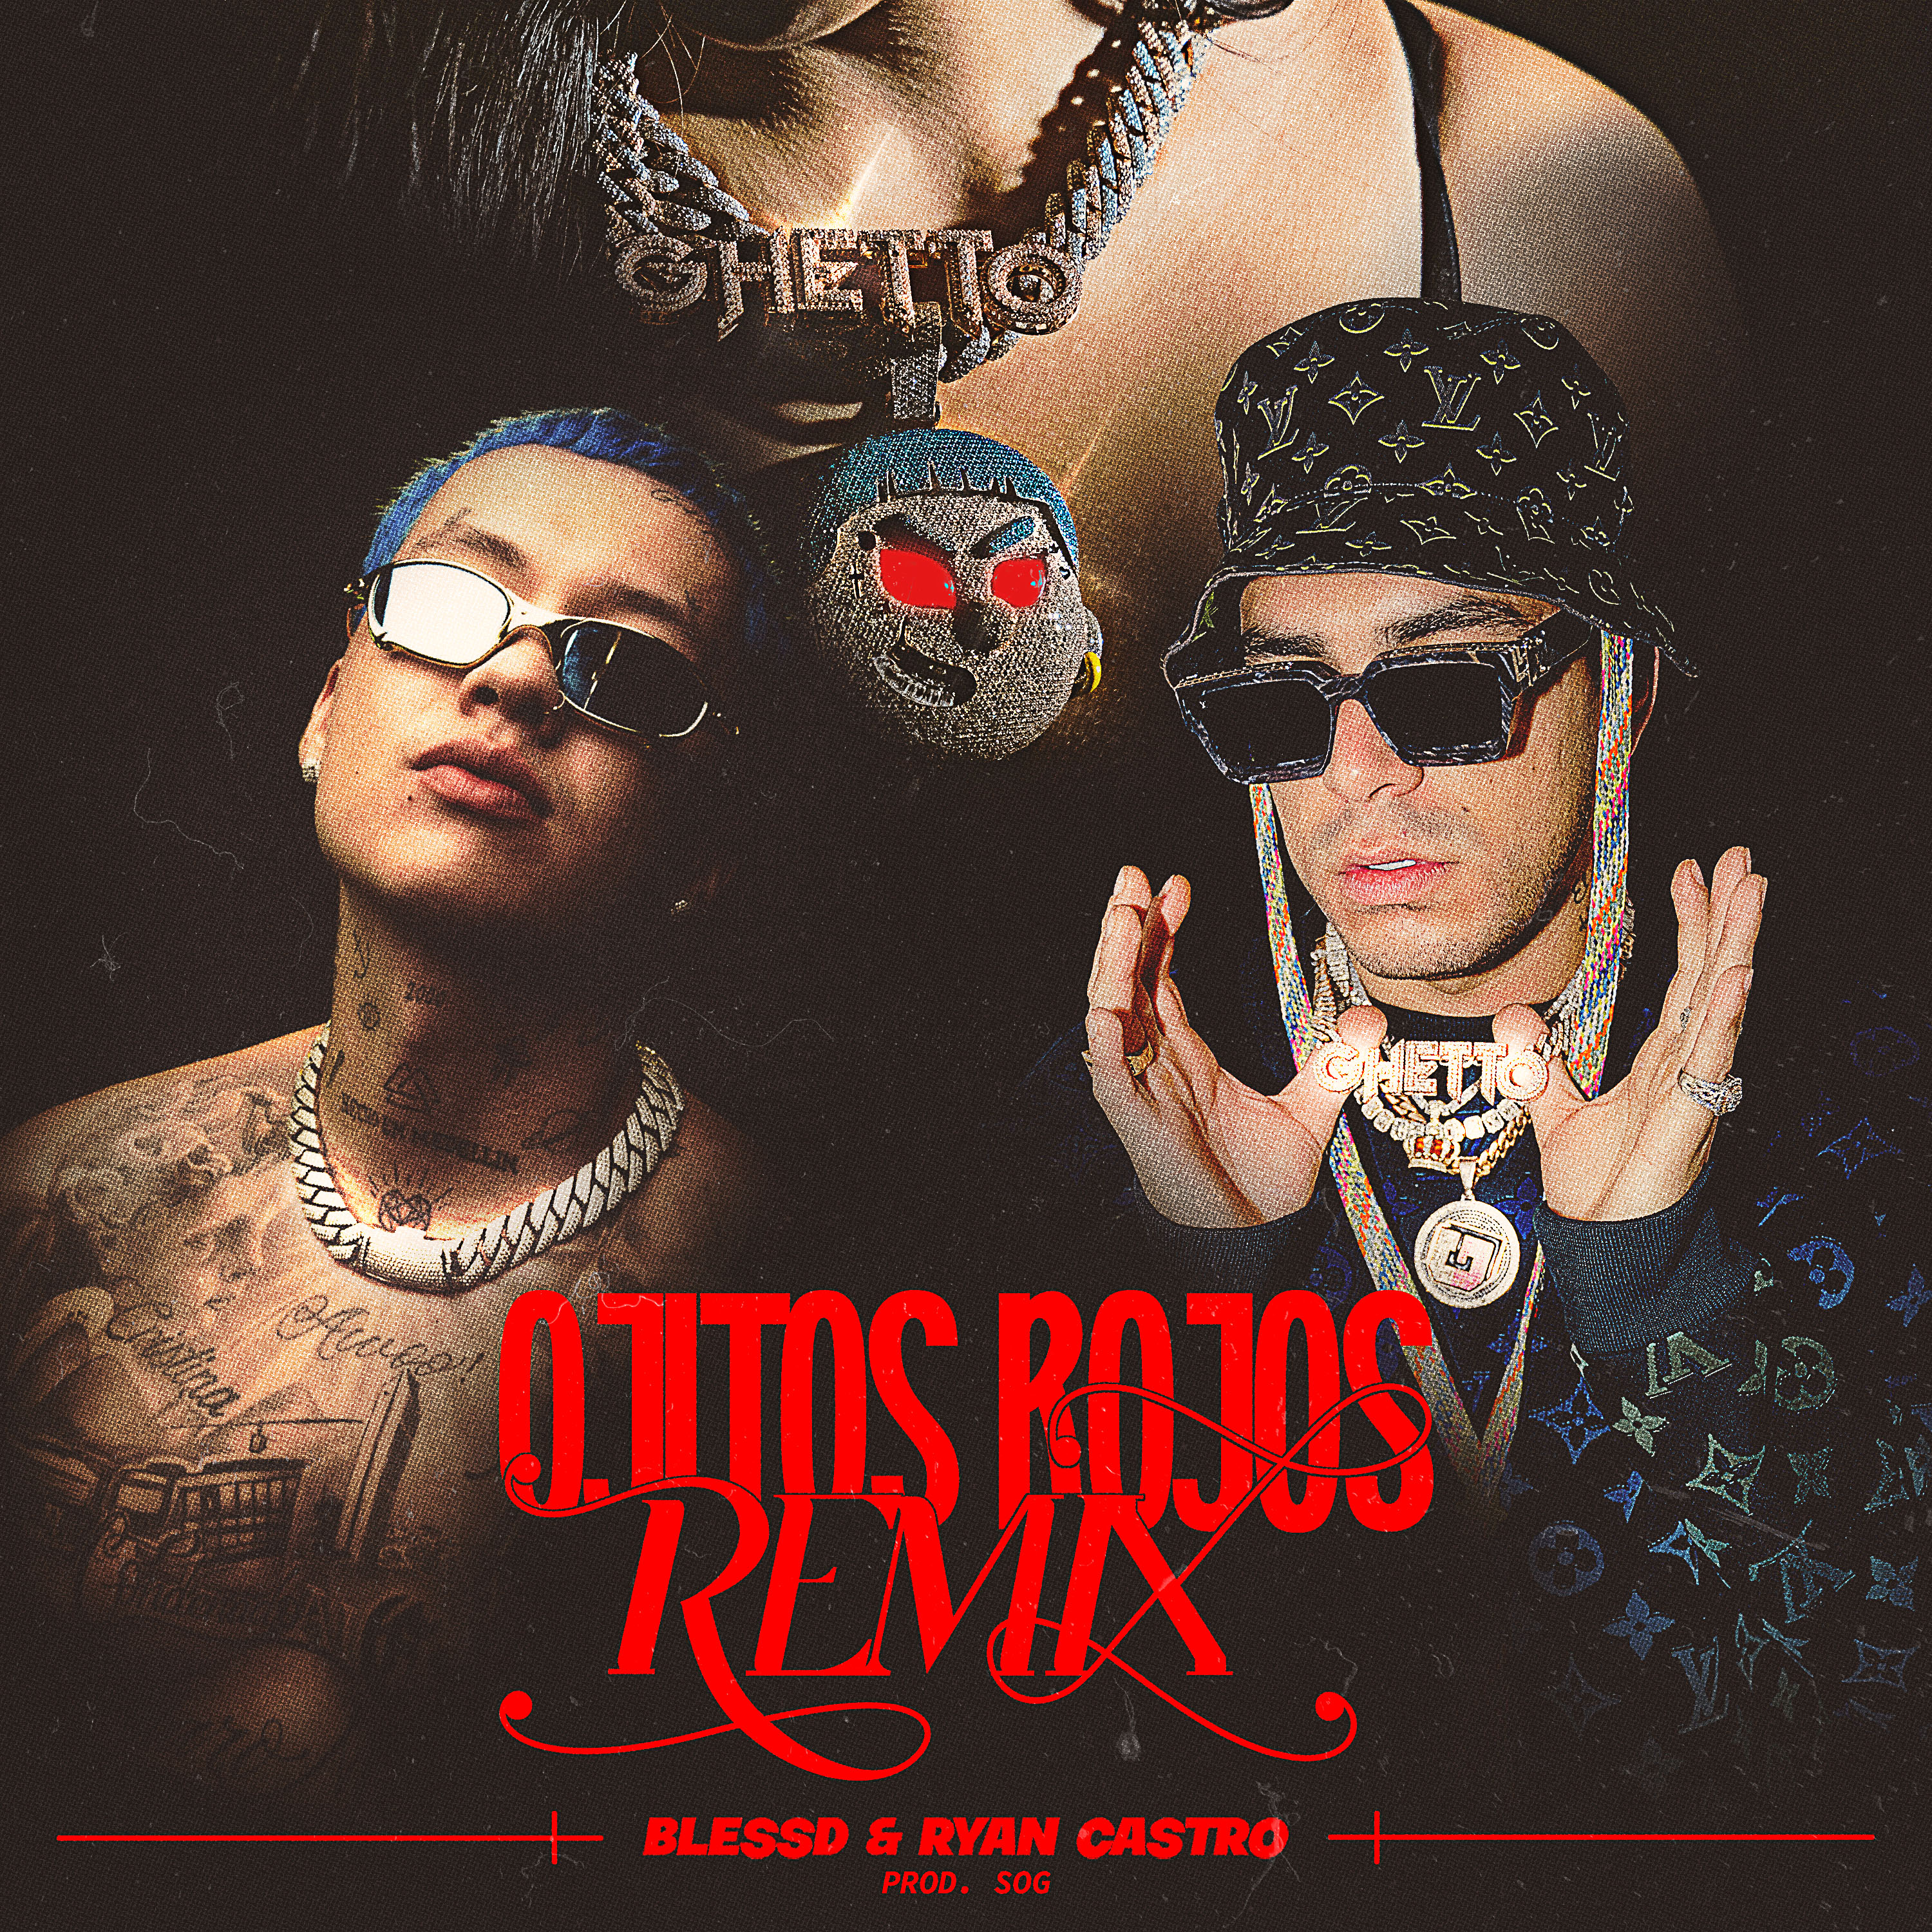 Blessd presenta “Ojitos Rojos Remix” junto a Ryan Castro